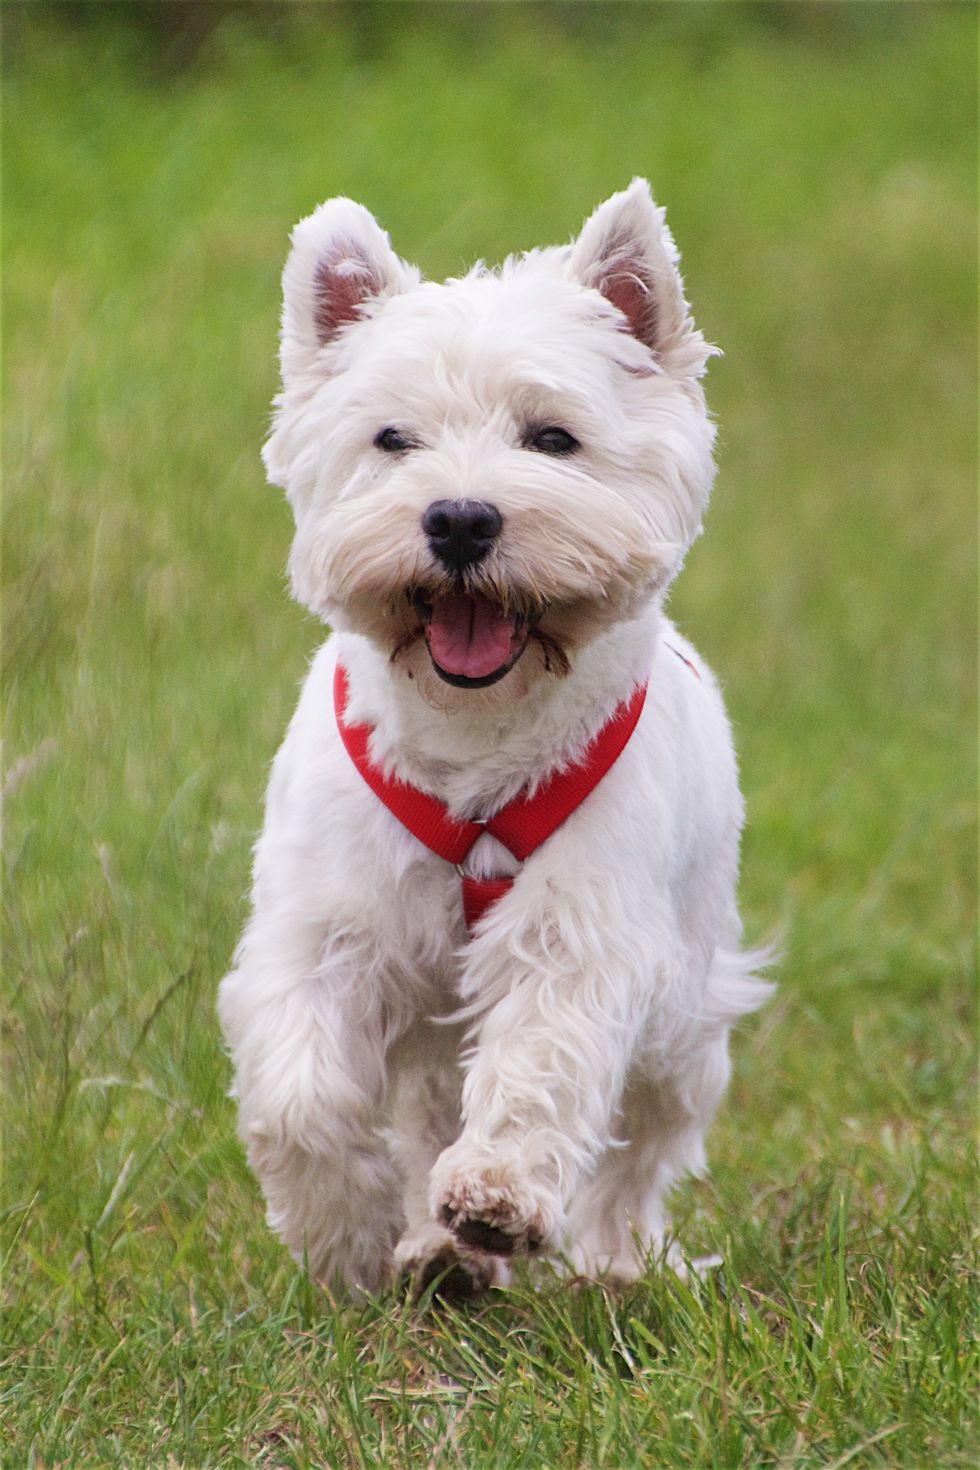 West Highland White Terrier Dog Breed Information